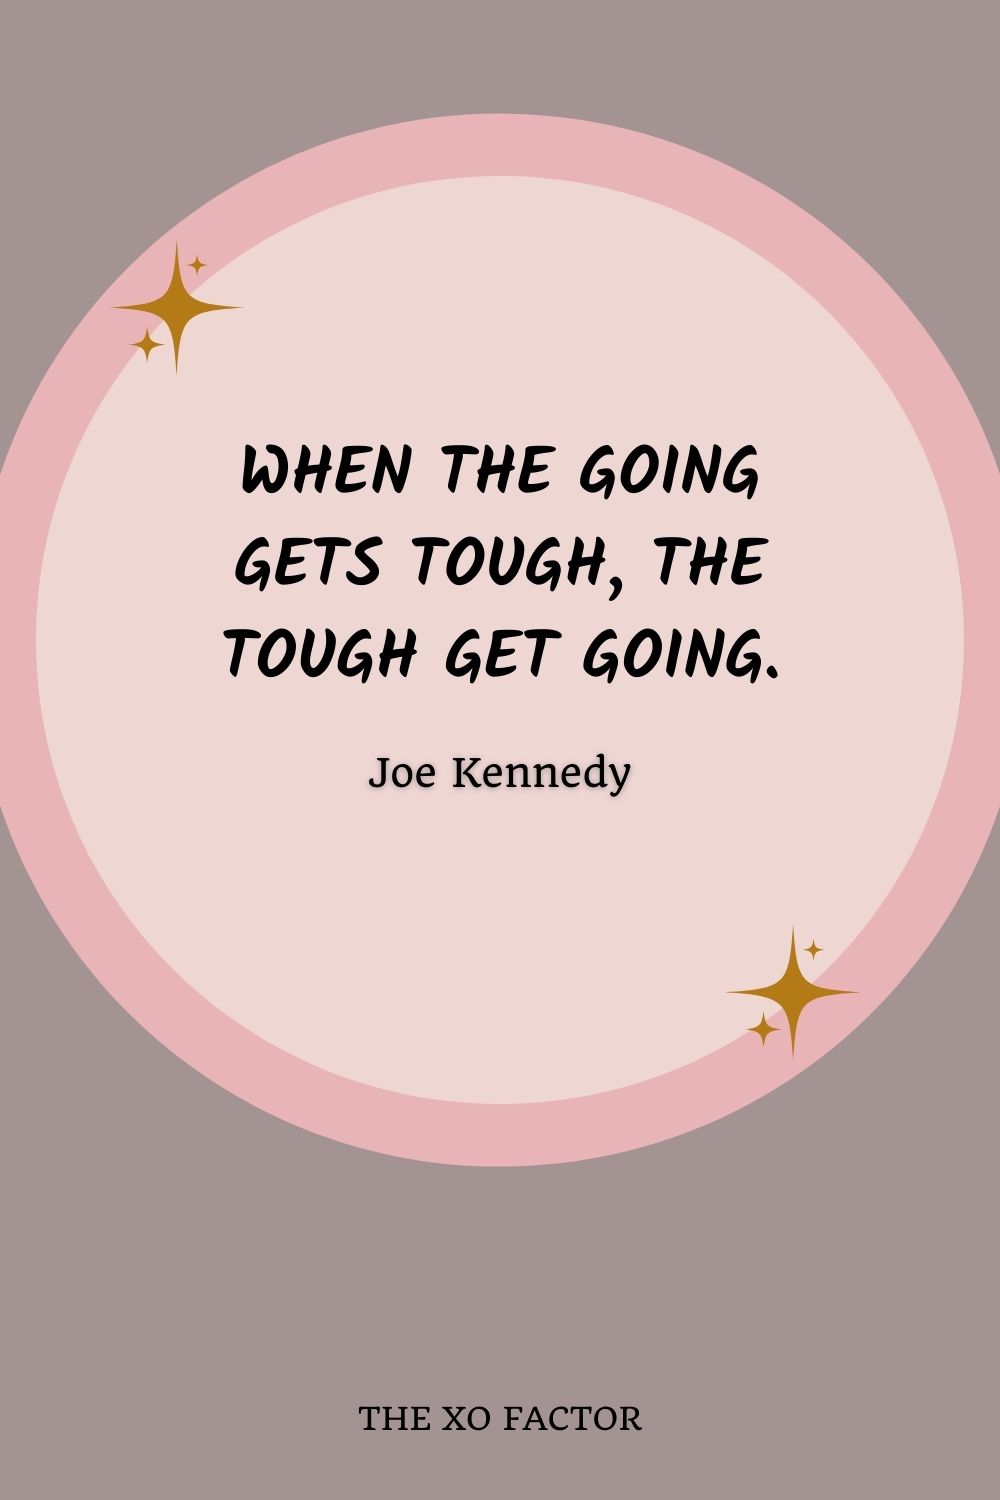 When the going gets tough, the tough get going. Joe Kennedy